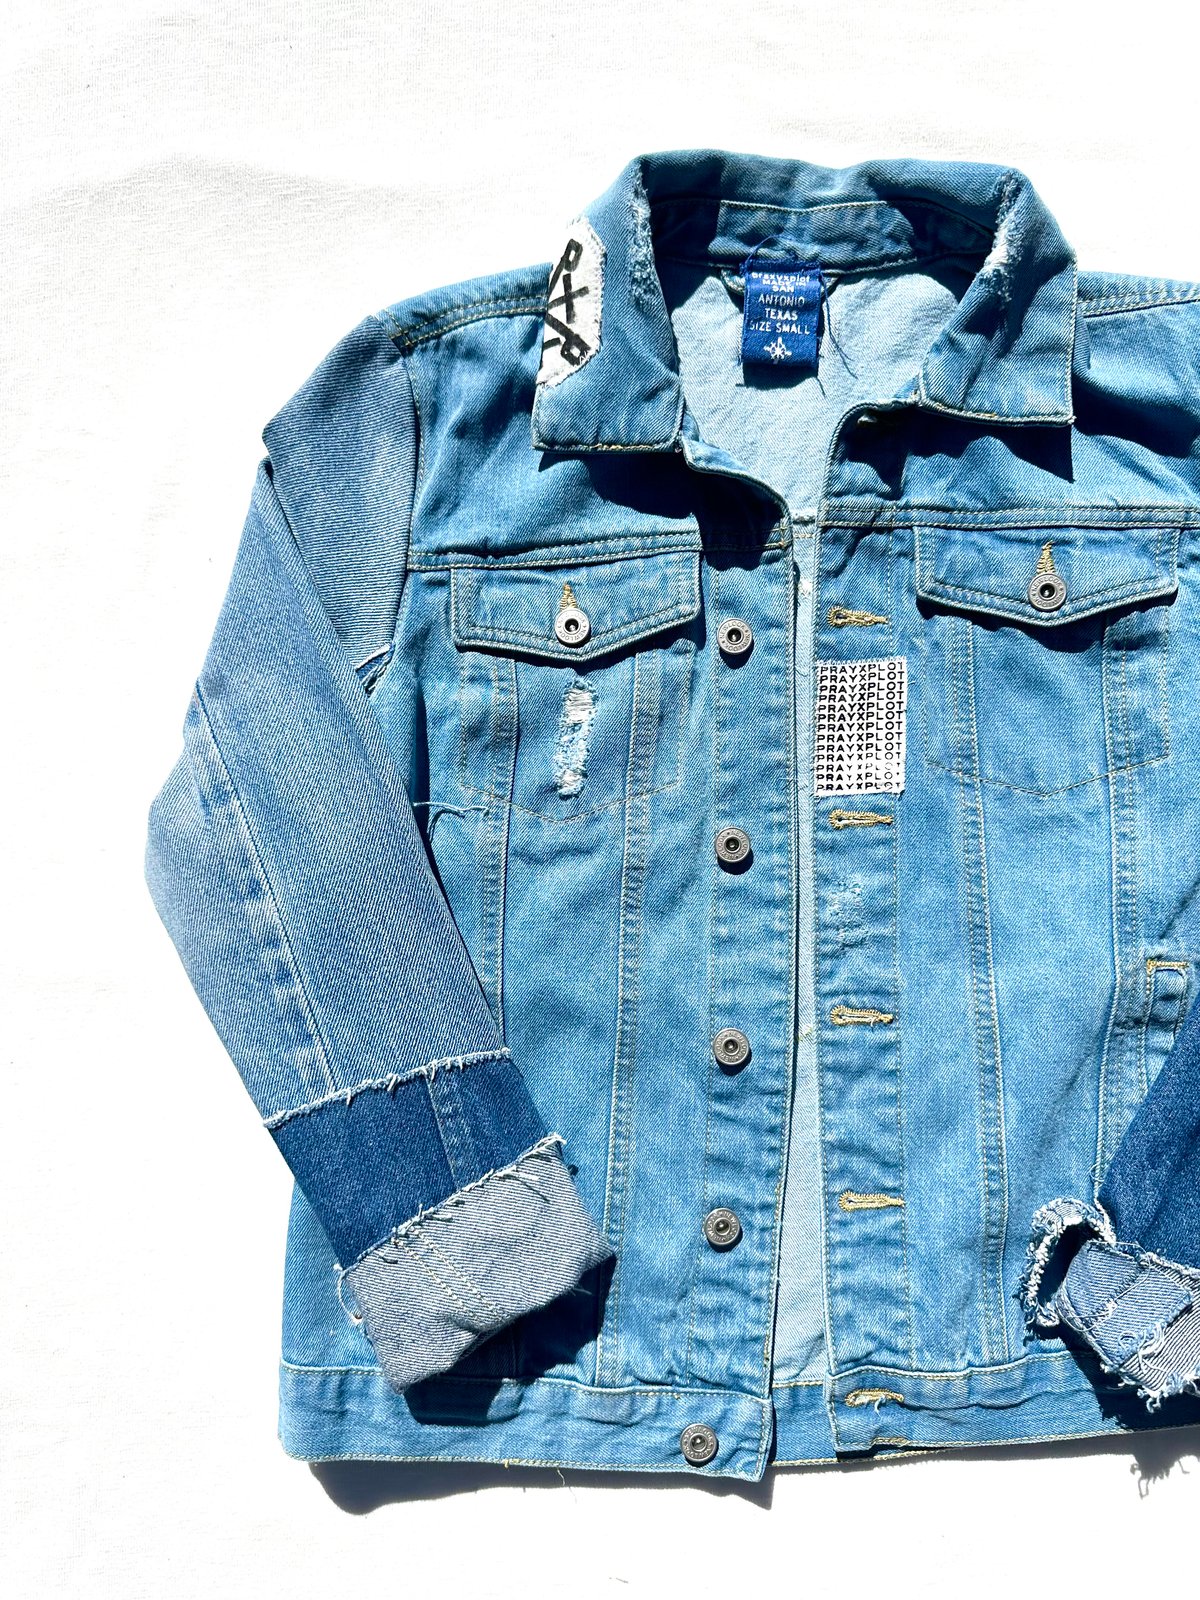 DIY Vintage Patch Denim Jacket Refashion | My Poppet Makes